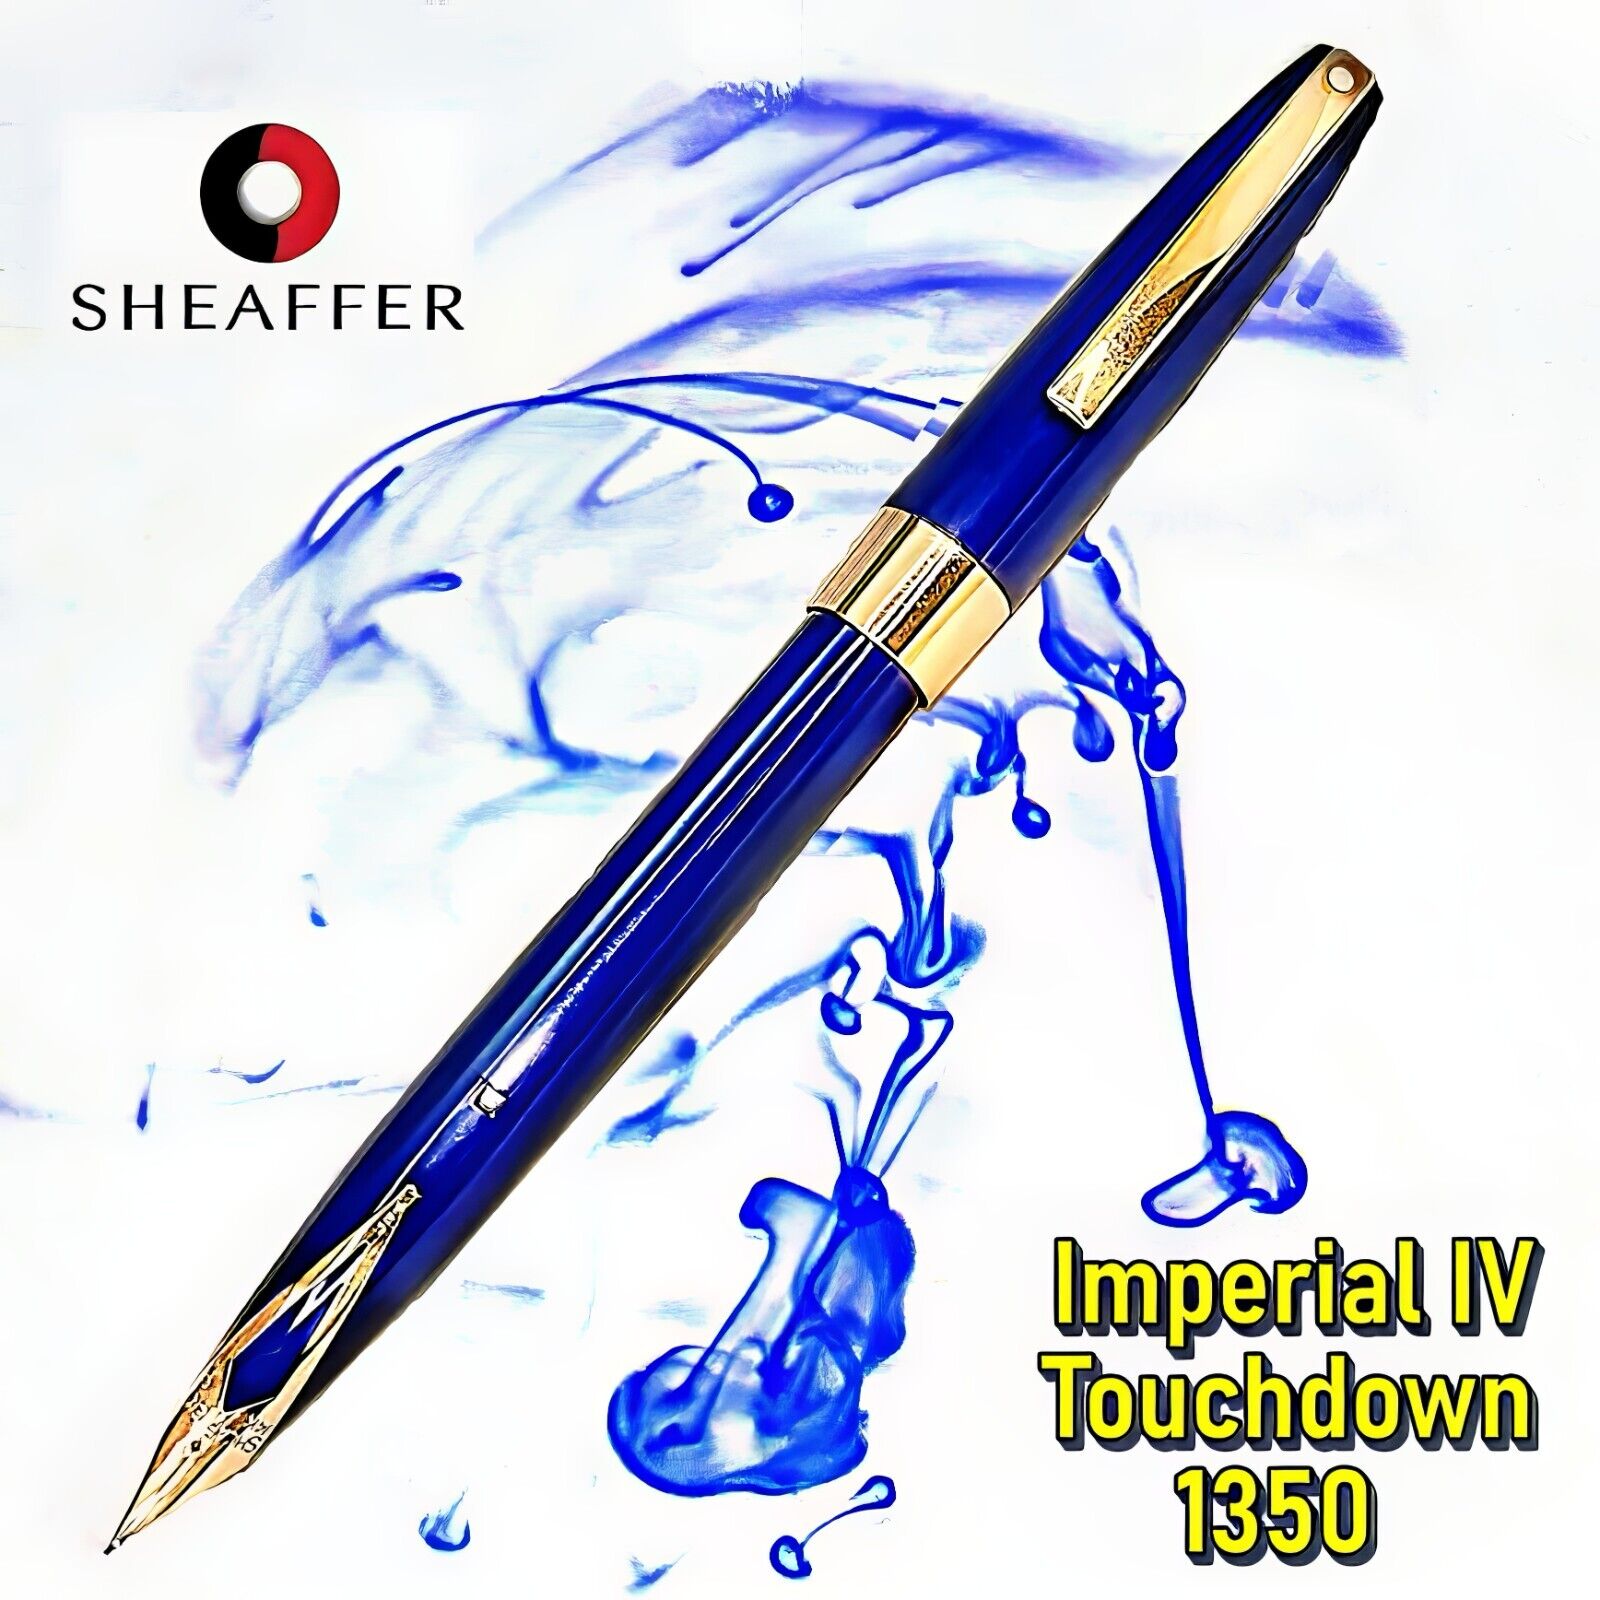 Sheaffer Touchdown Imperial IV Fountain Pen Blue 1350 14K F Gold Nib RESTORED